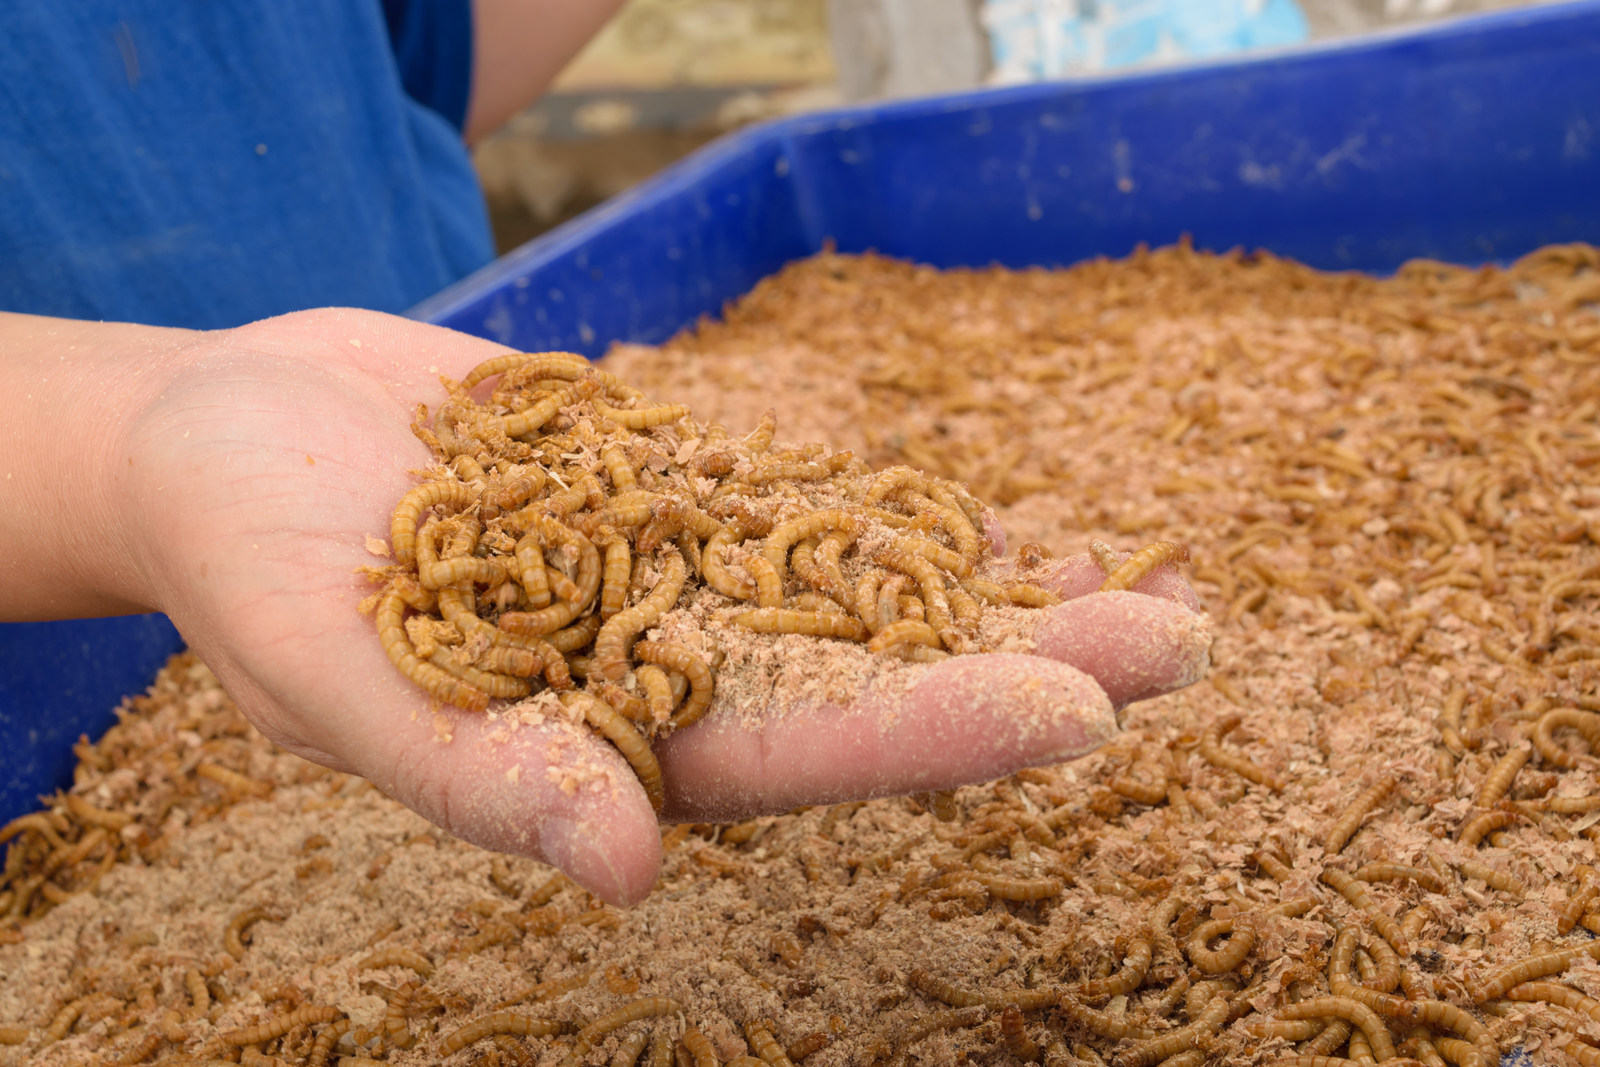 Mealworm meal for European sea bass. Photo Shutterstock,Pongmoji